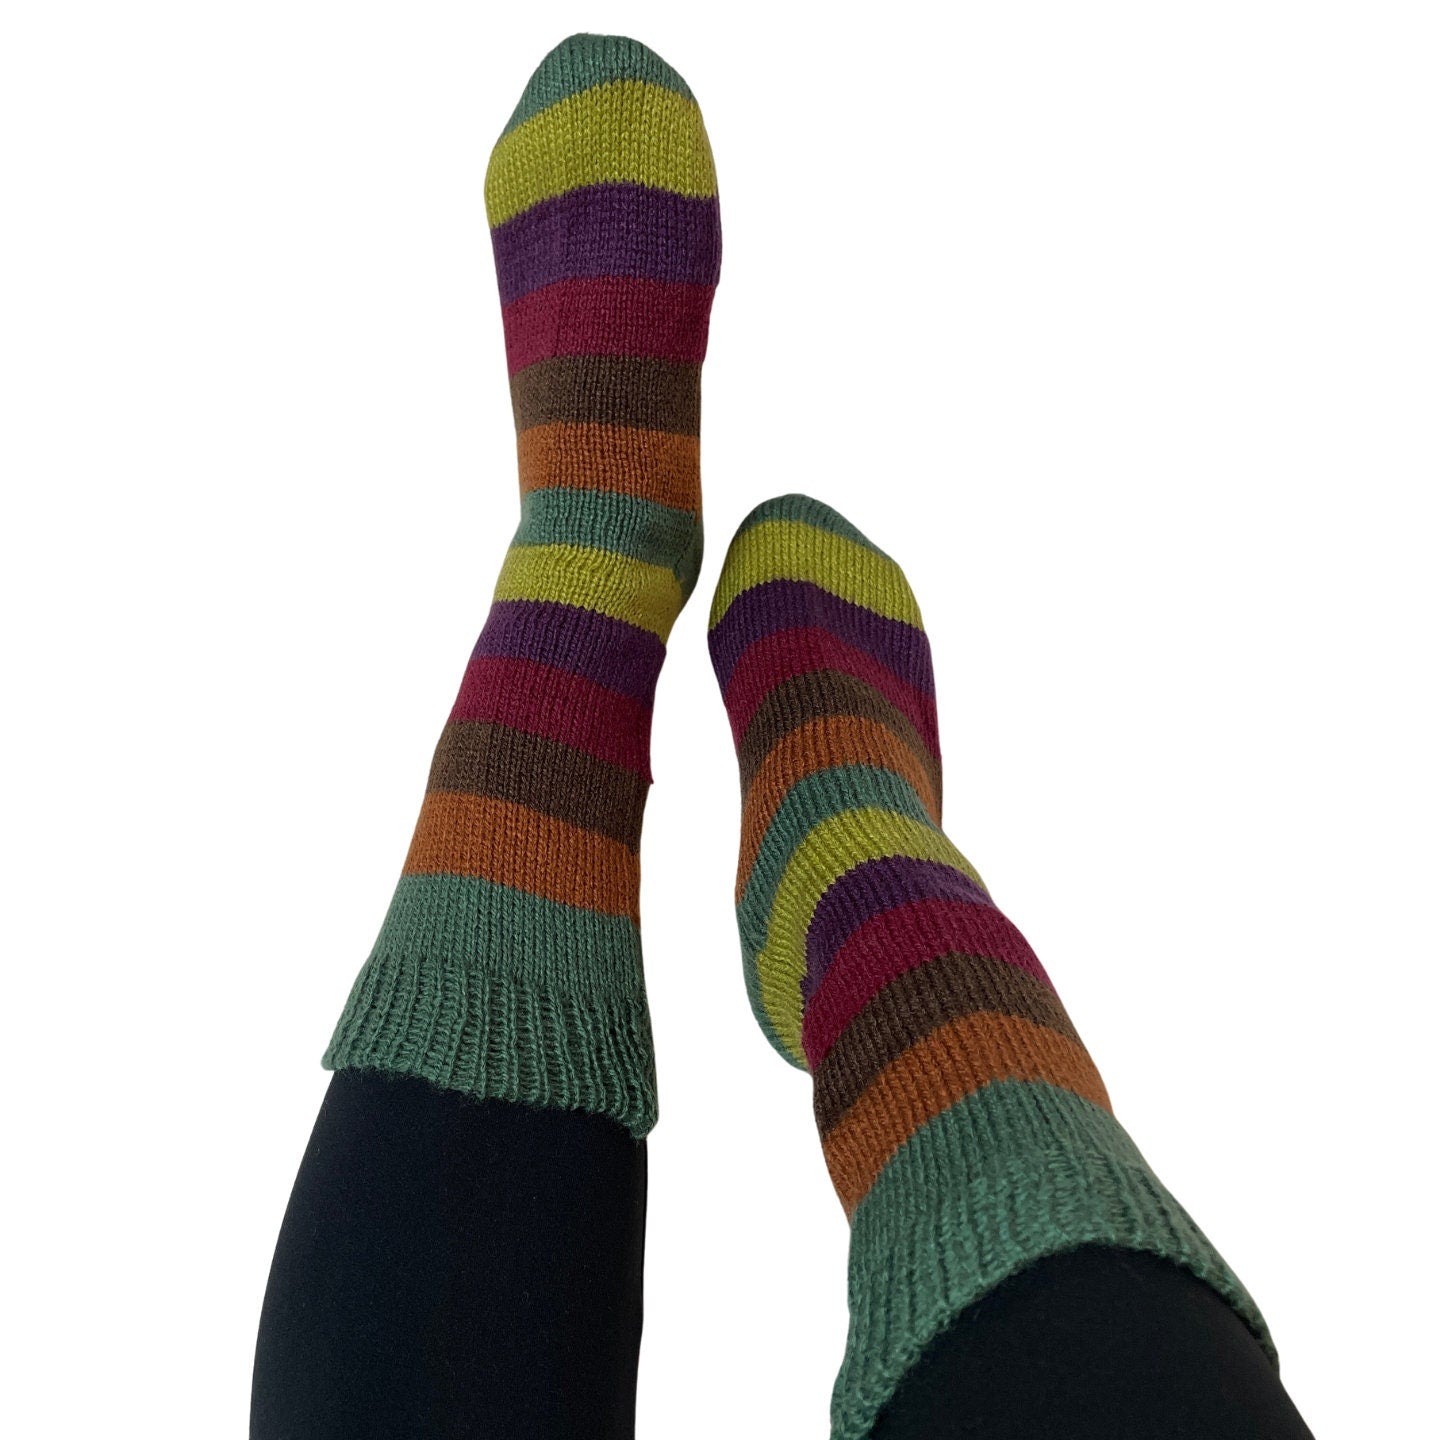 Winter Knitted Mid-Calf Socks | Striped Socks | Size 6-8 US Adult Socks